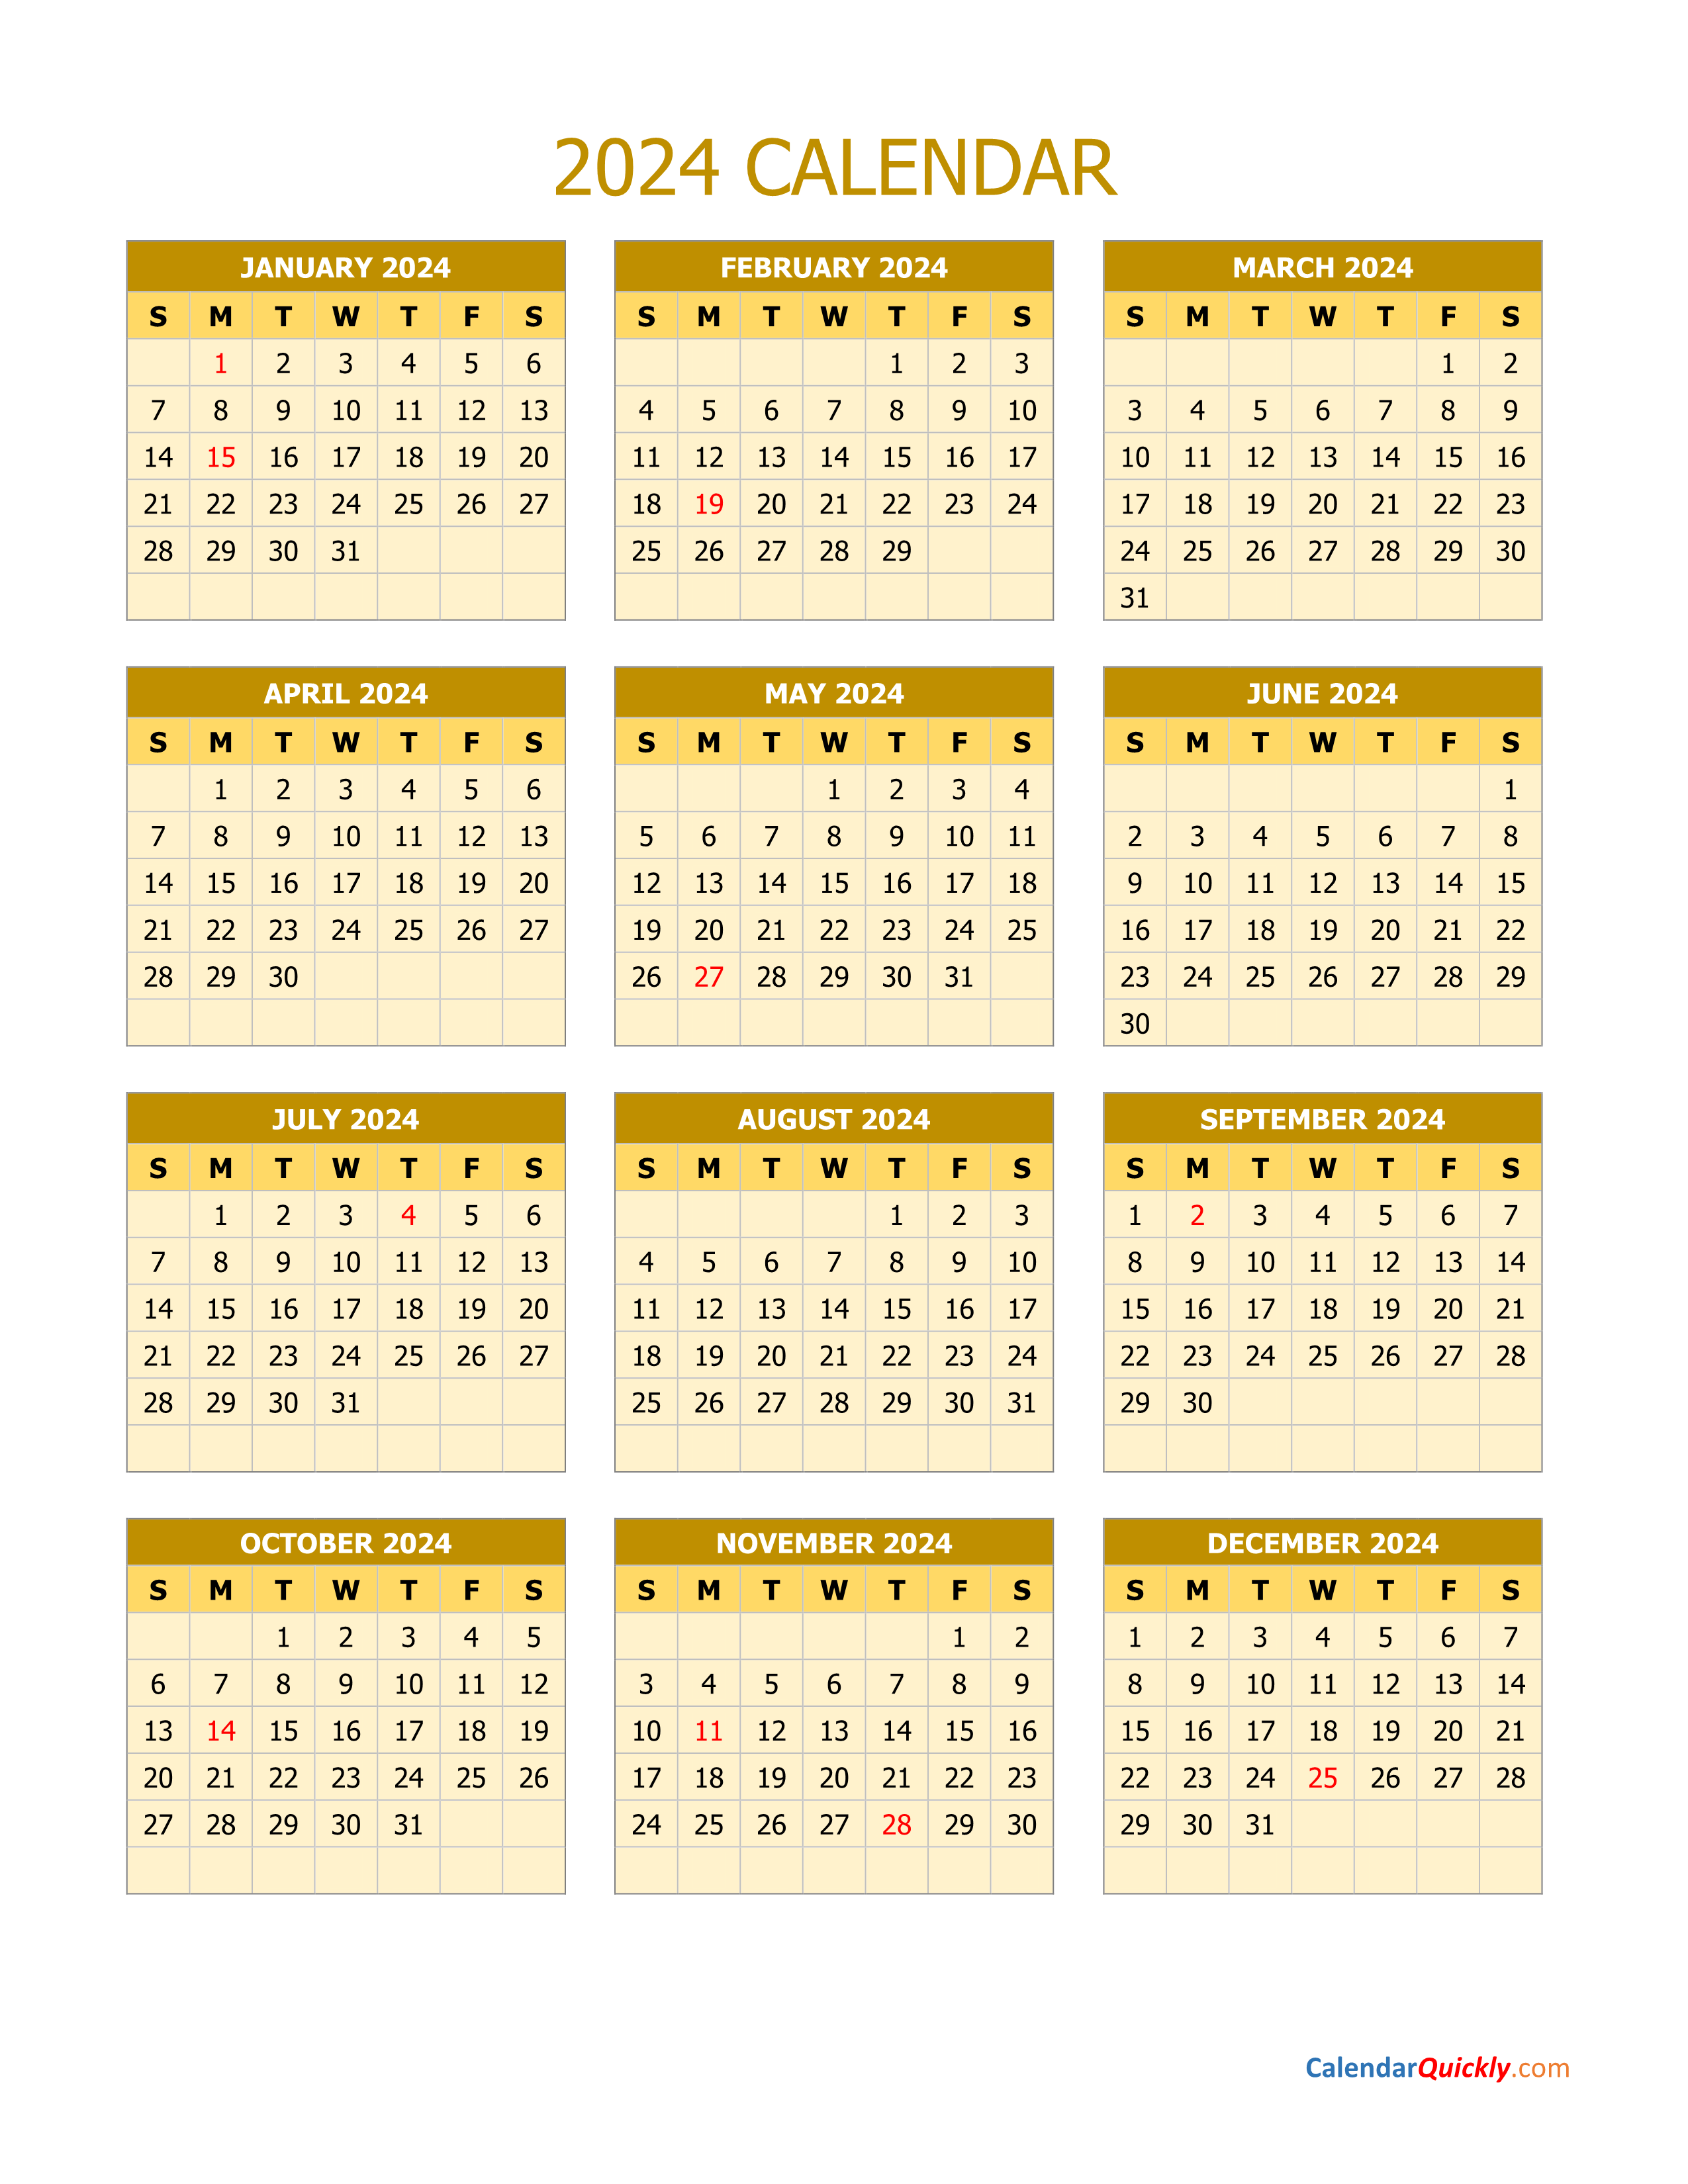 Best Online Calendar 2024 - Easy to Use Calendar App 2024